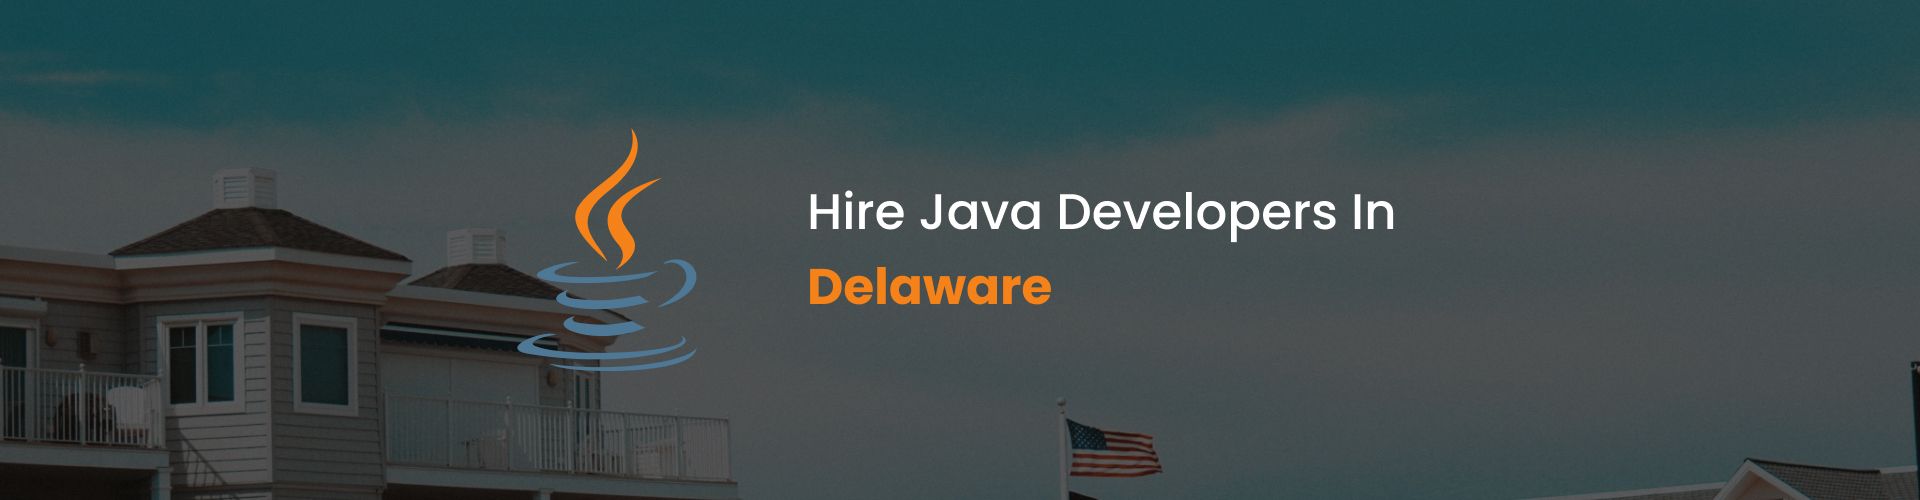 hire java developers in delaware 